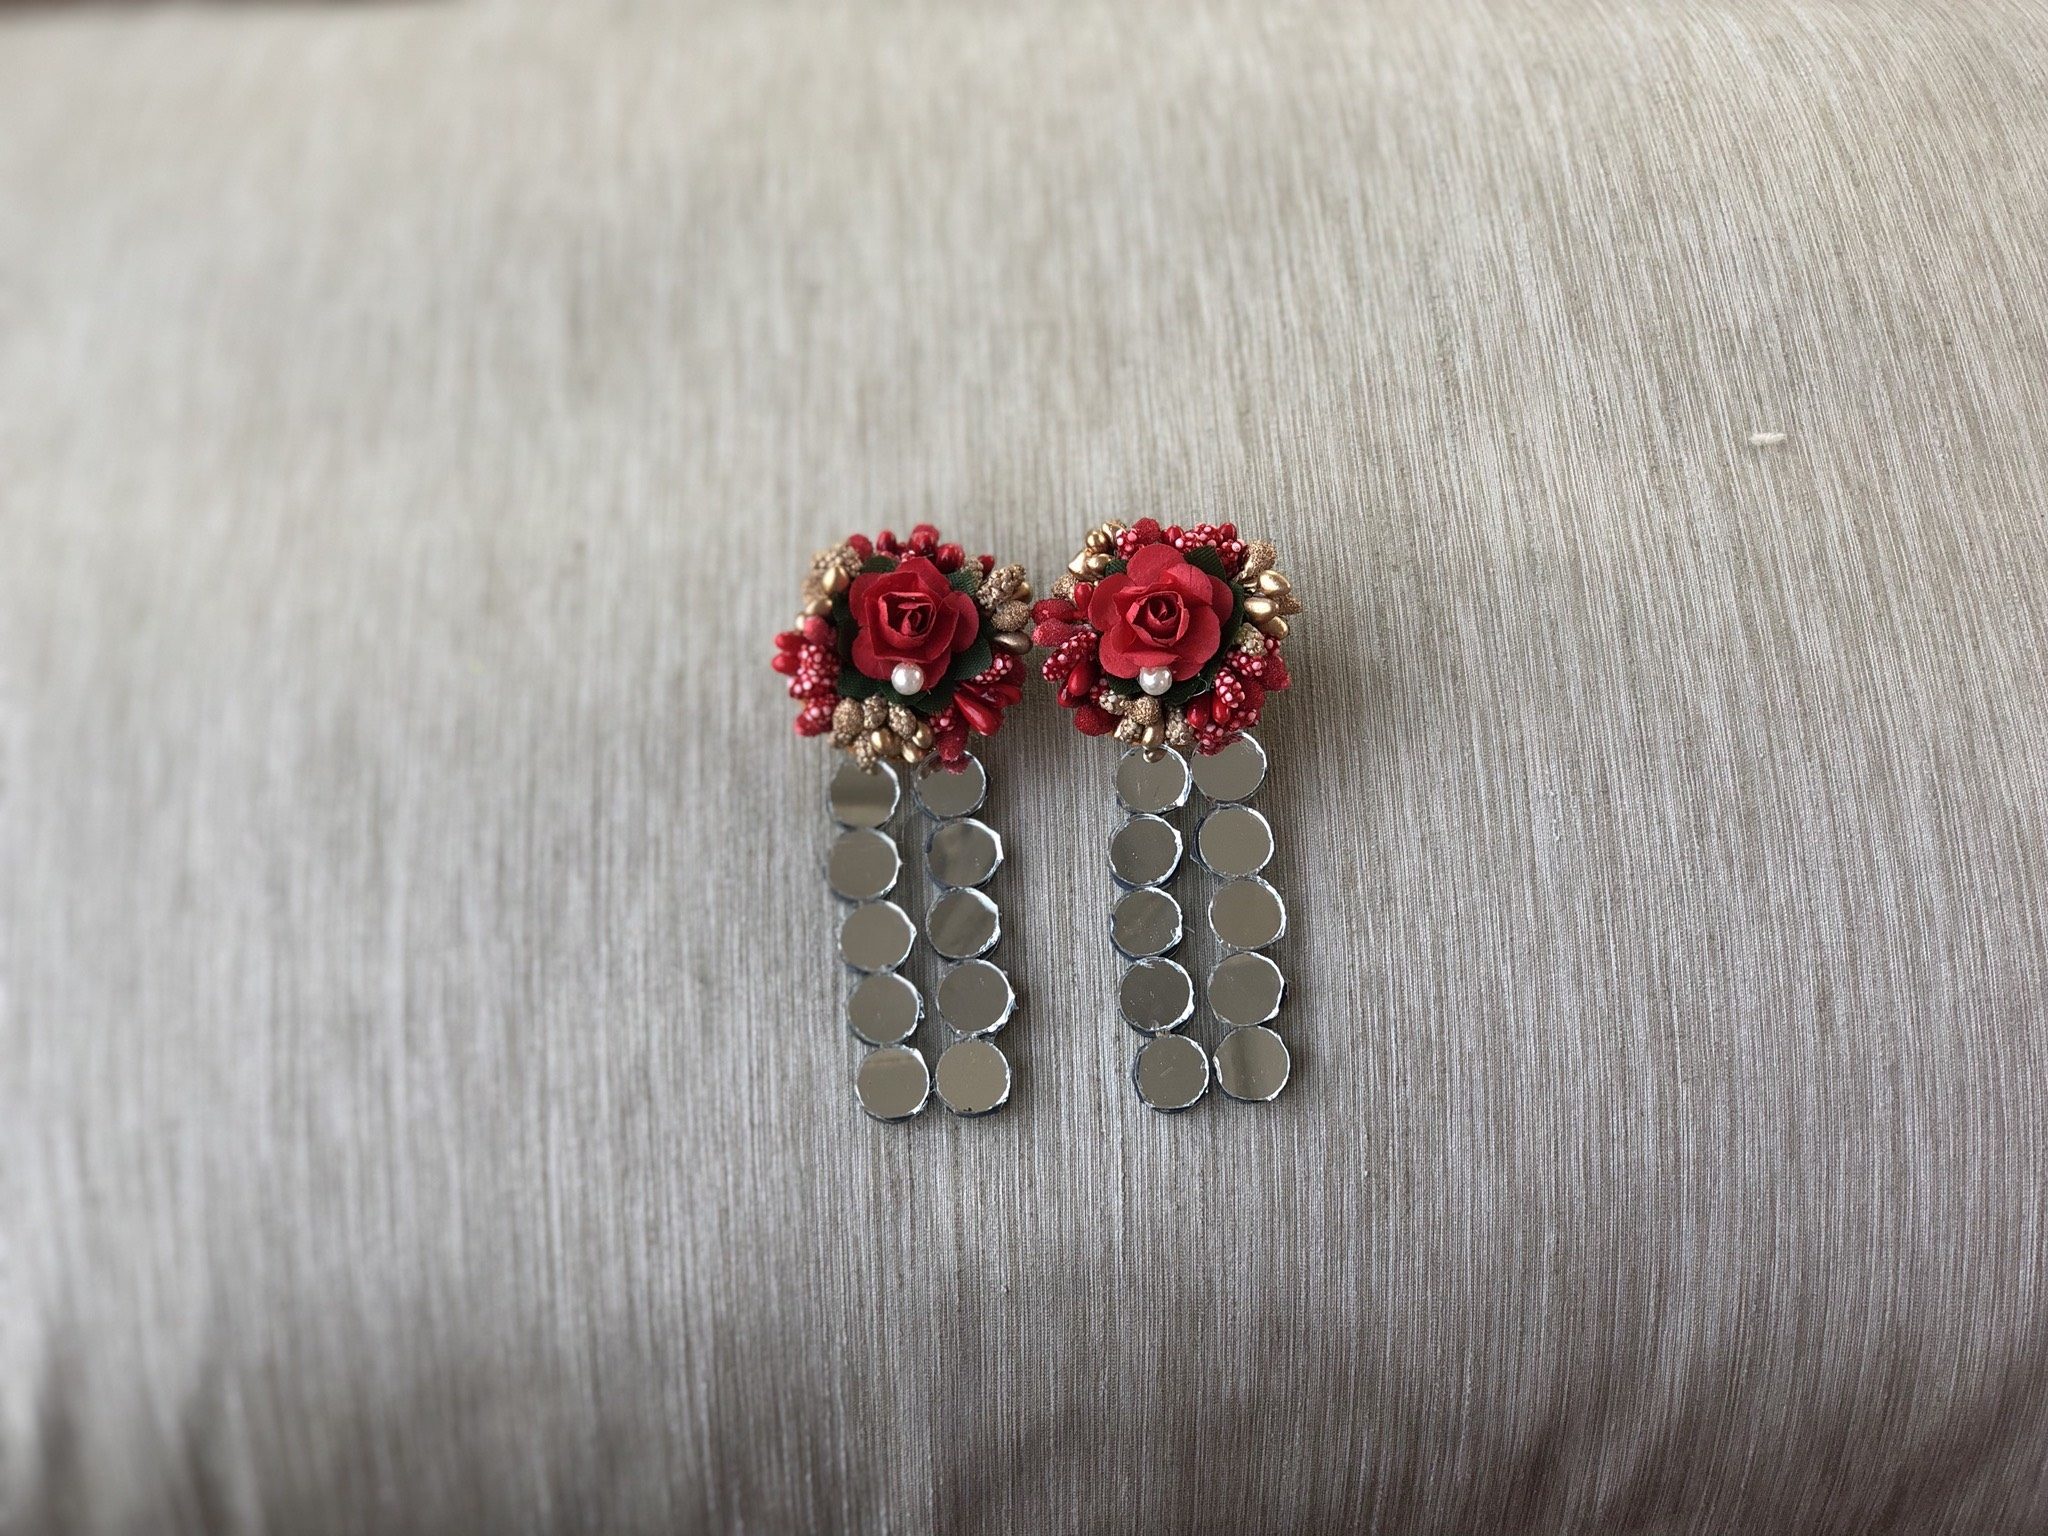 Red Star Flower Earrings. Red Earrings. Silver Stud Earrings. Red Flower  Earrings. Post Earrings. Handmade Earrings. Handmade Jewelry. - Etsy | Red  earrings, Red flower earrings, Earrings handmade